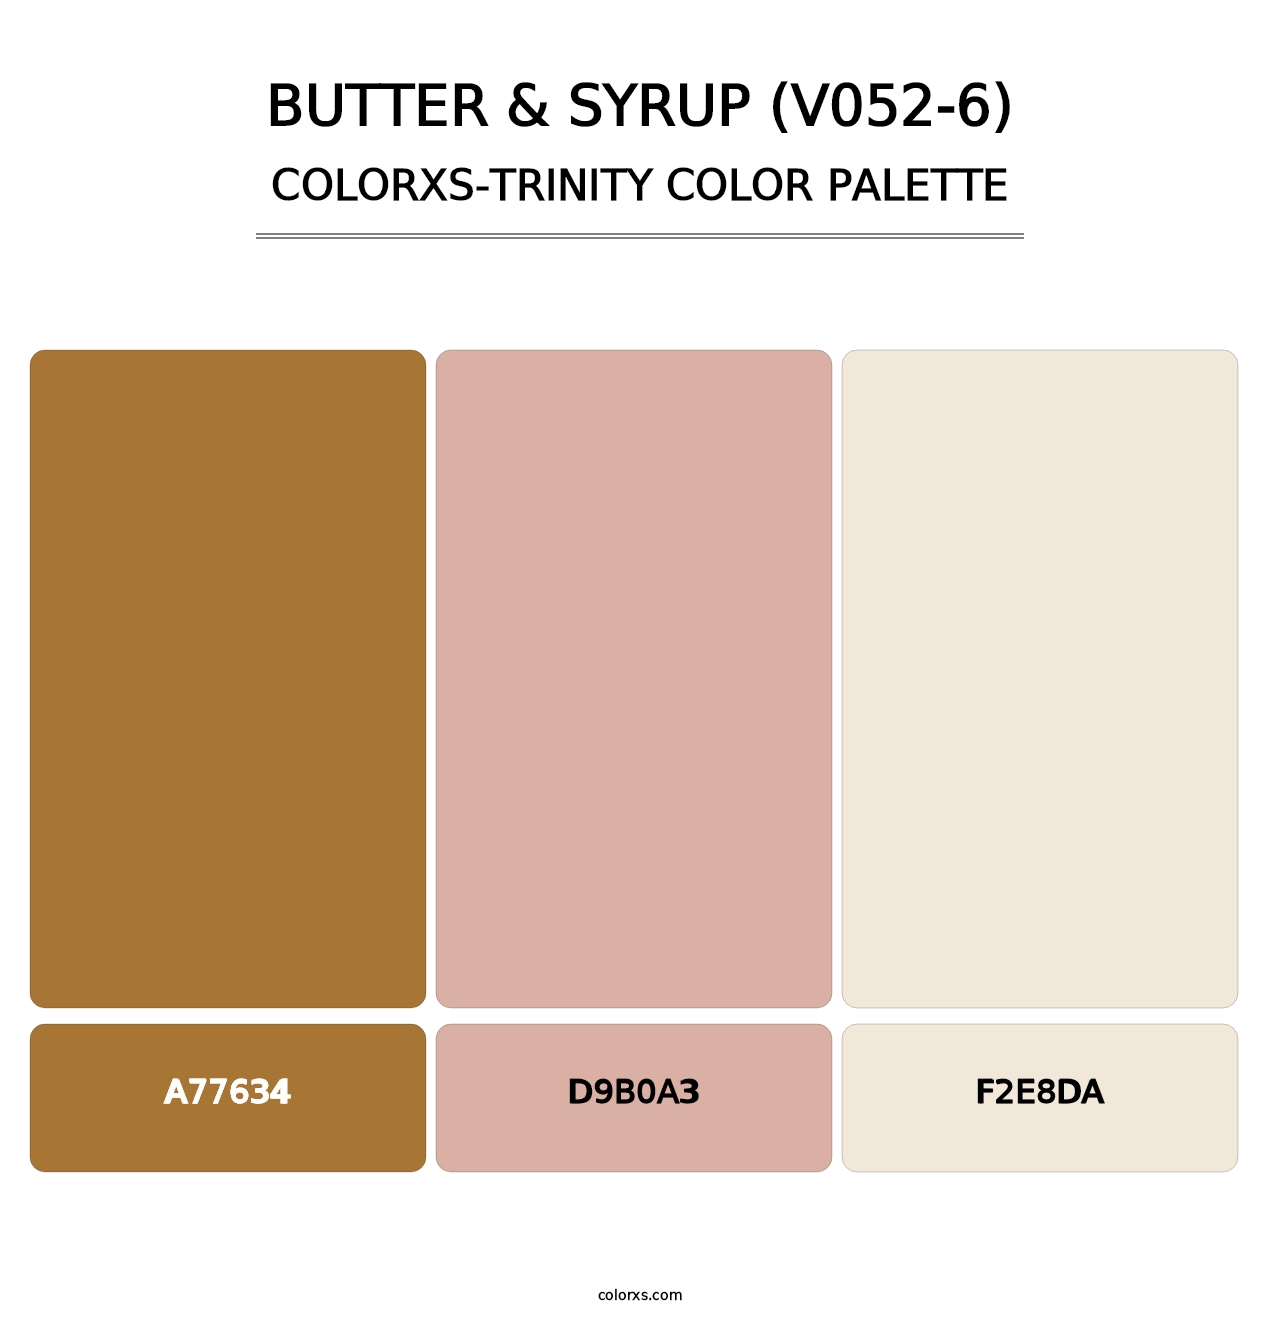 Butter & Syrup (V052-6) - Colorxs Trinity Palette